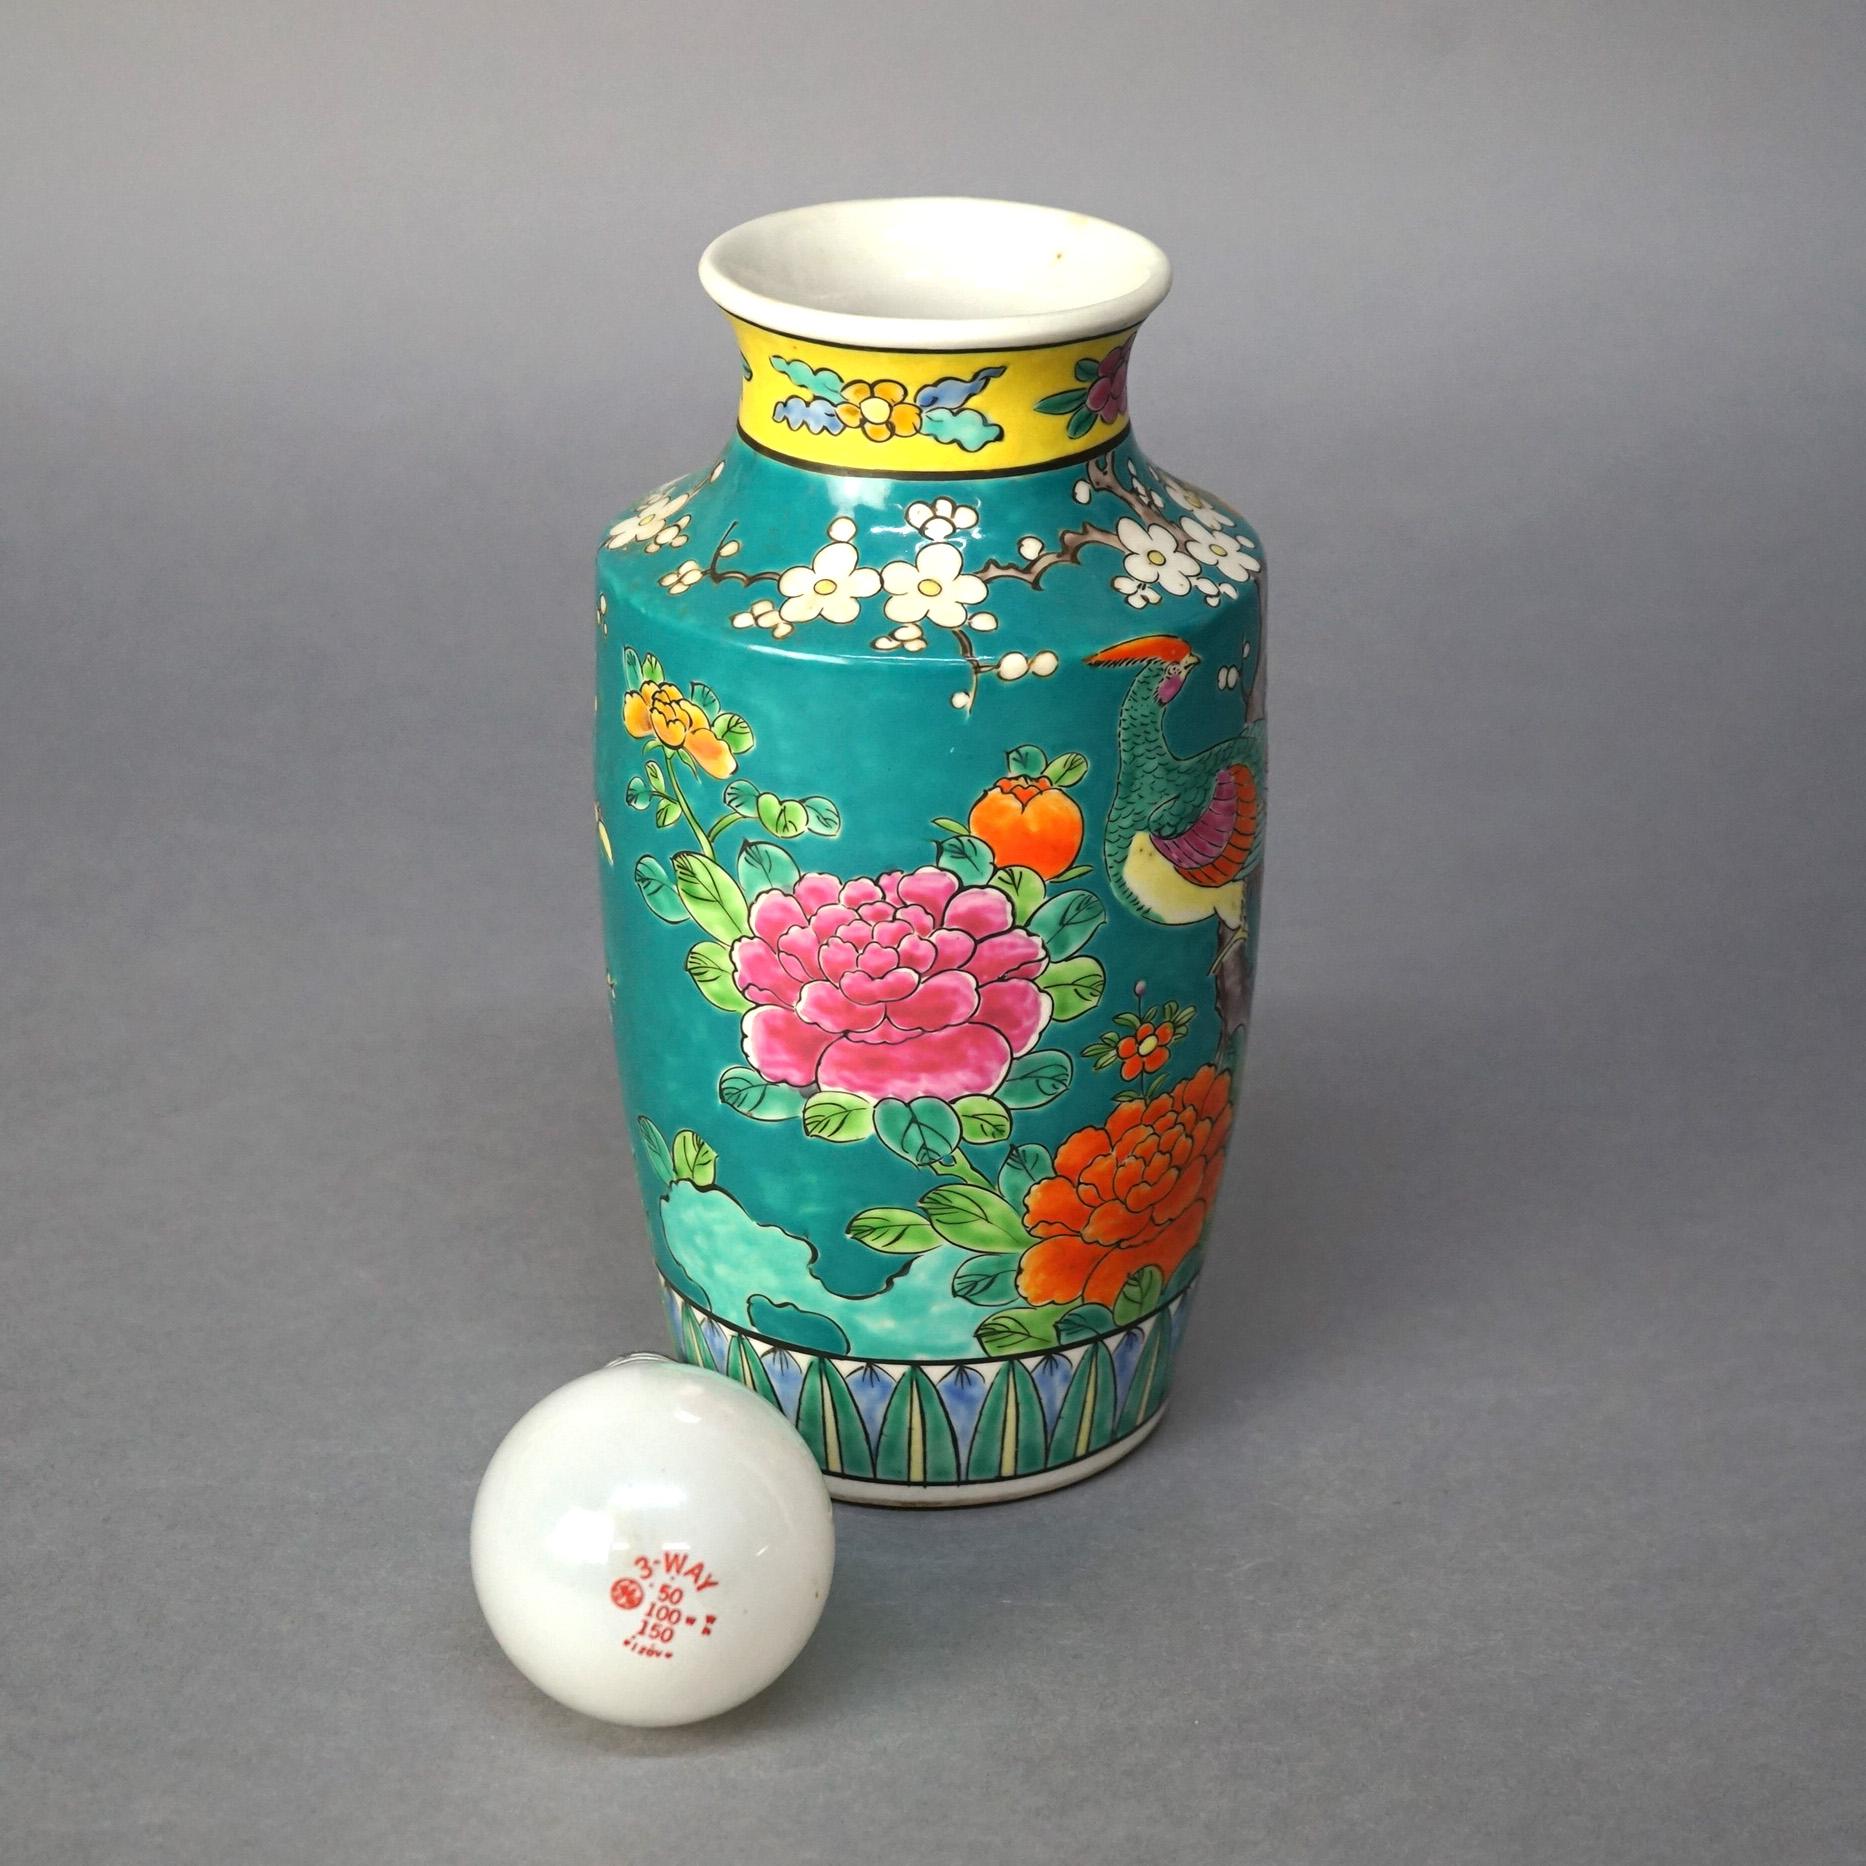 20th Century Antique Japanese Porcelain Enameled Garden Scene Vase with Birds & Flowers C1910 For Sale